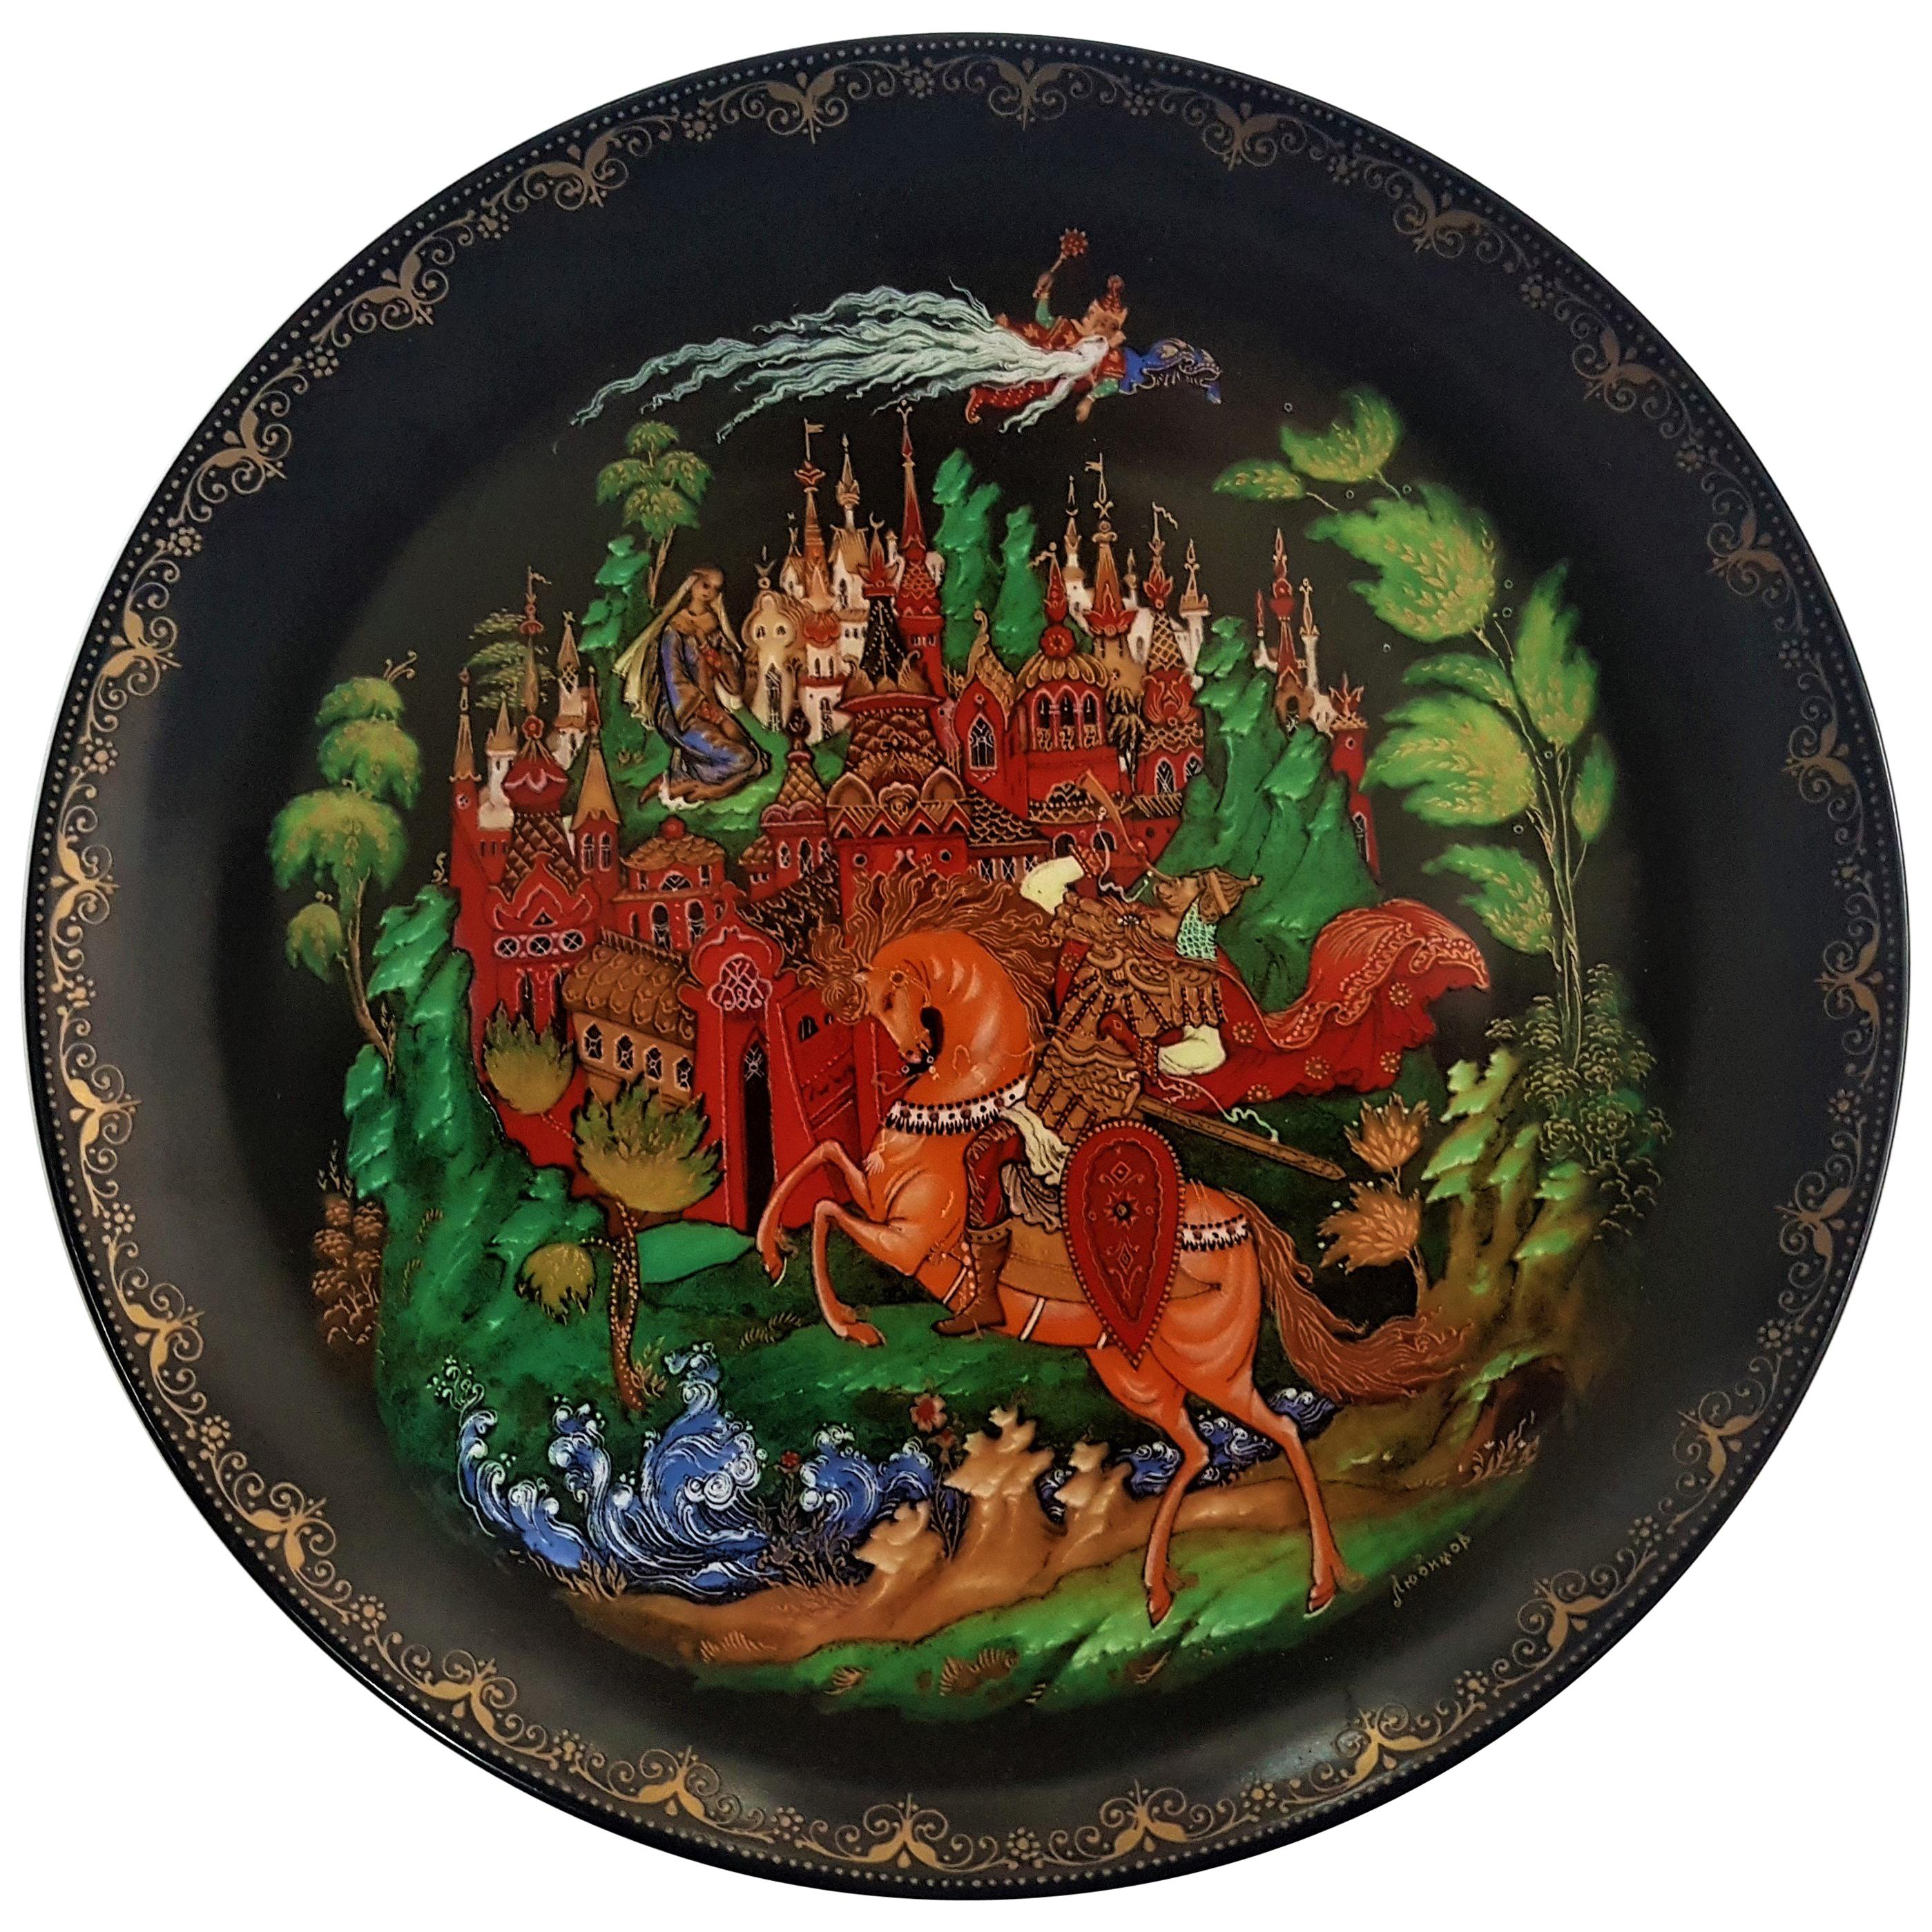 Pushkin "Ruslan & Ludmilla" 18k Gold Collectors Fairy Tale Plate 1988, Russia